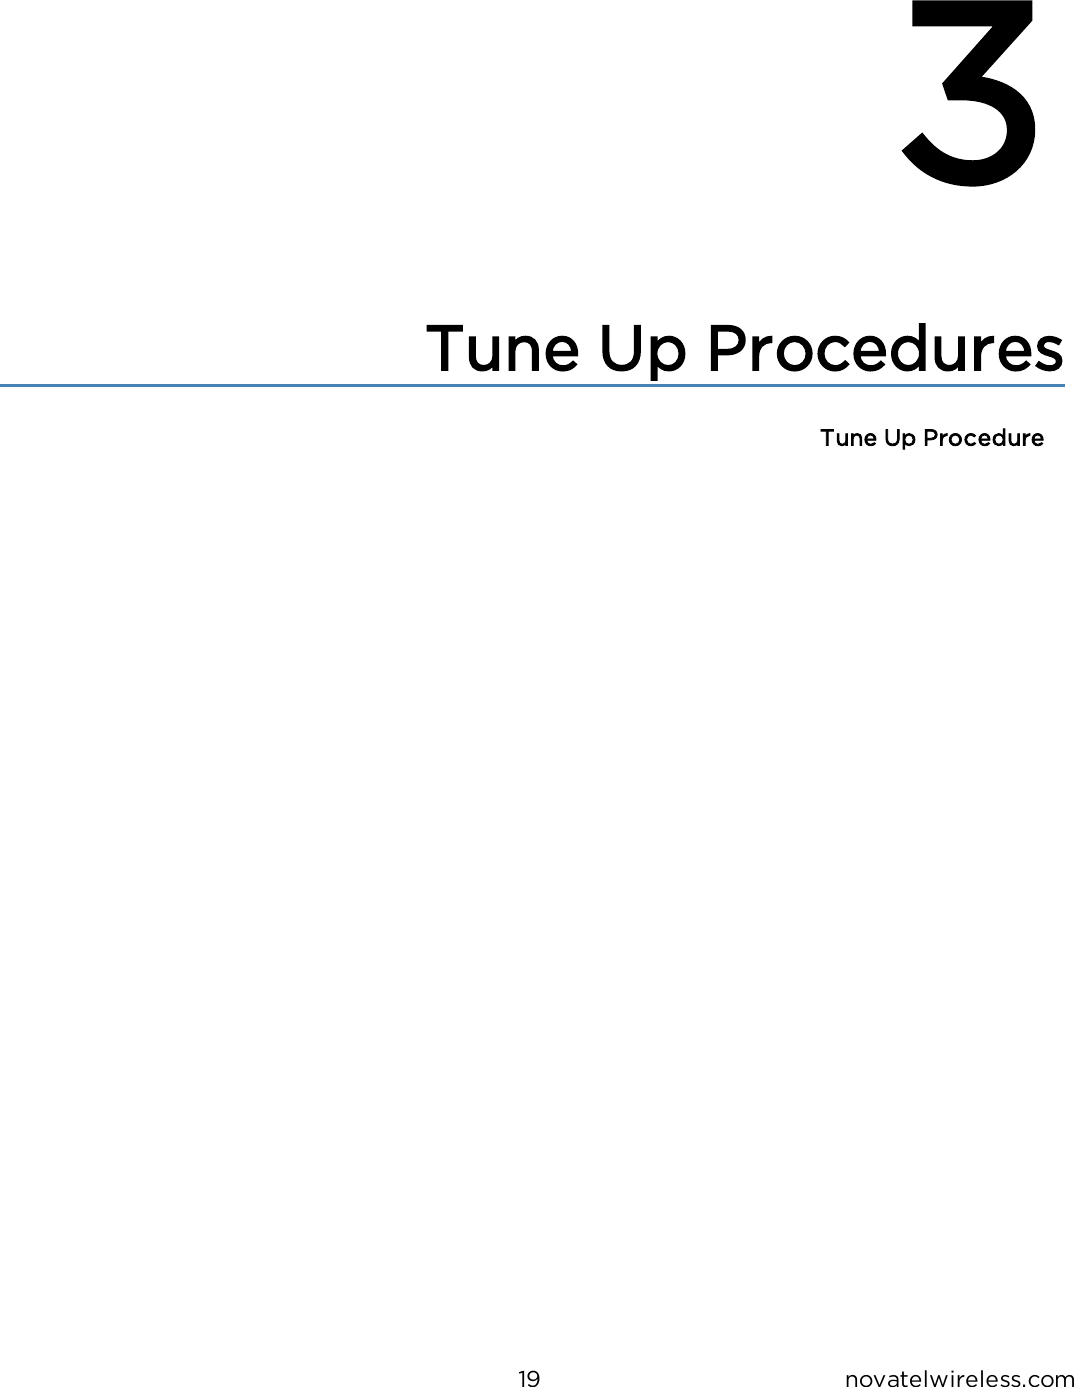 19 novatelwireless.com3Tune Up ProceduresTune Up Procedure